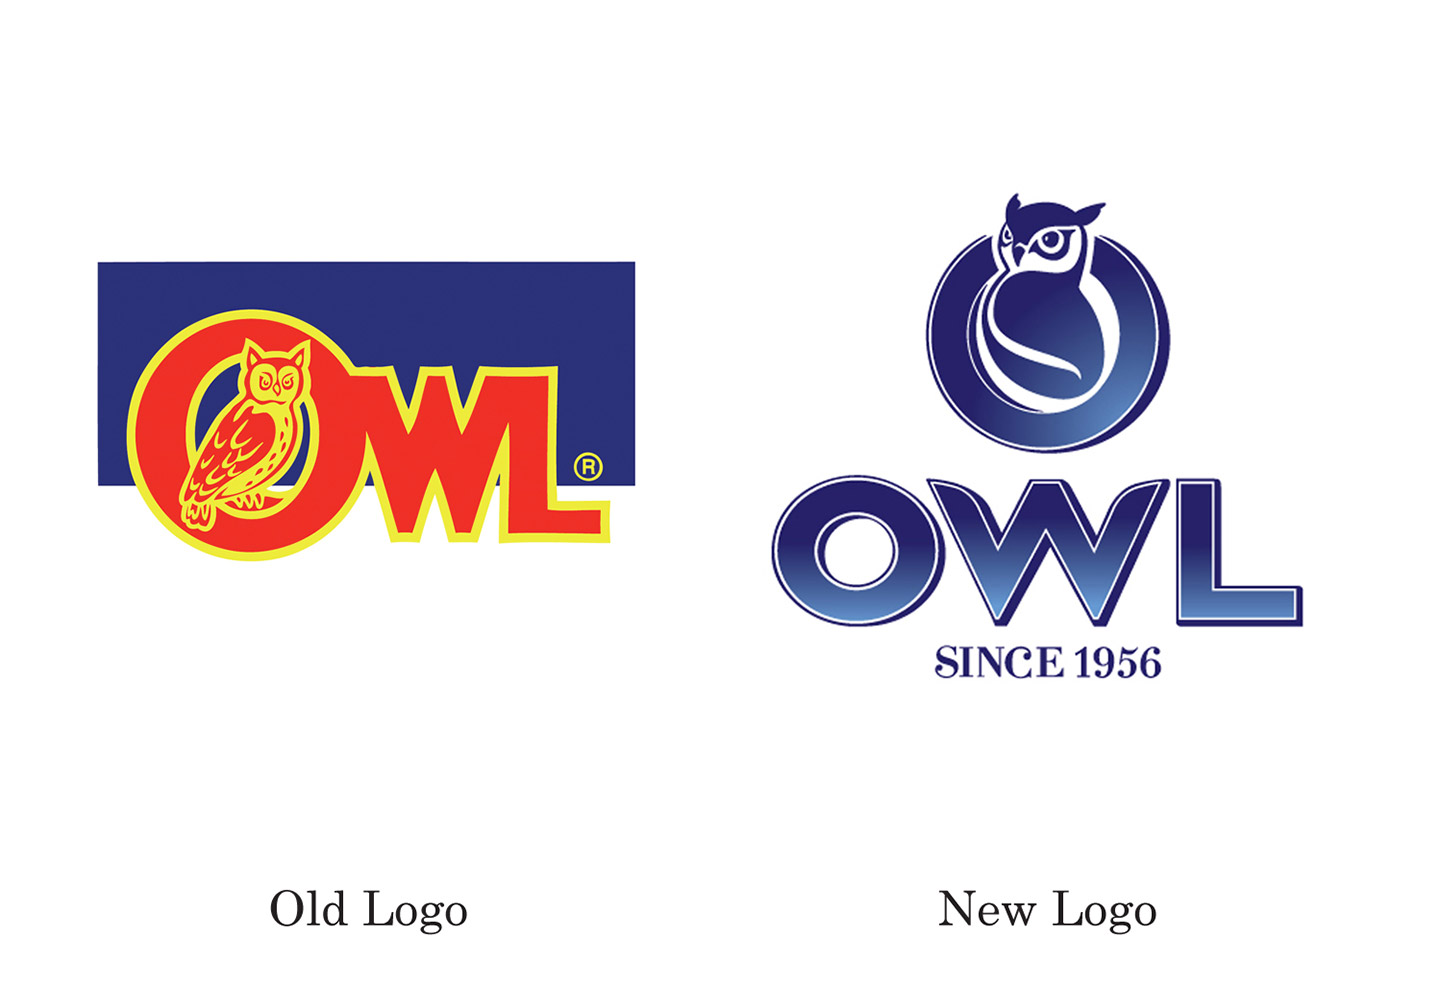 Brand Consultancy in FMCG Industry. Logo design for OWL.